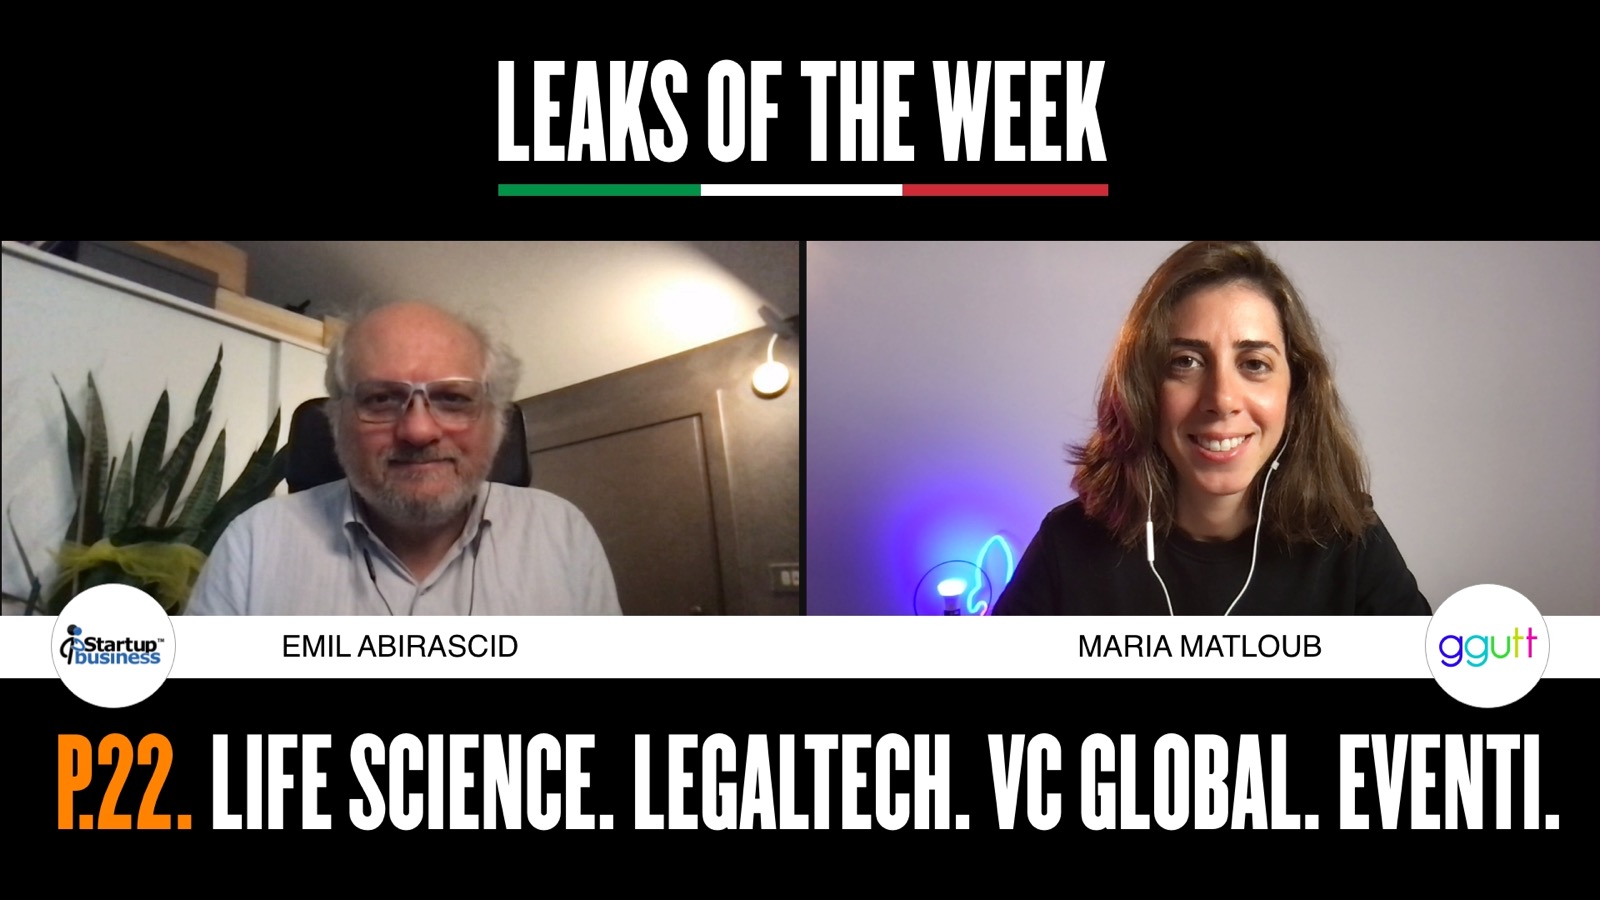 Leaks of the week #22, Life science, legal tech, venture capital